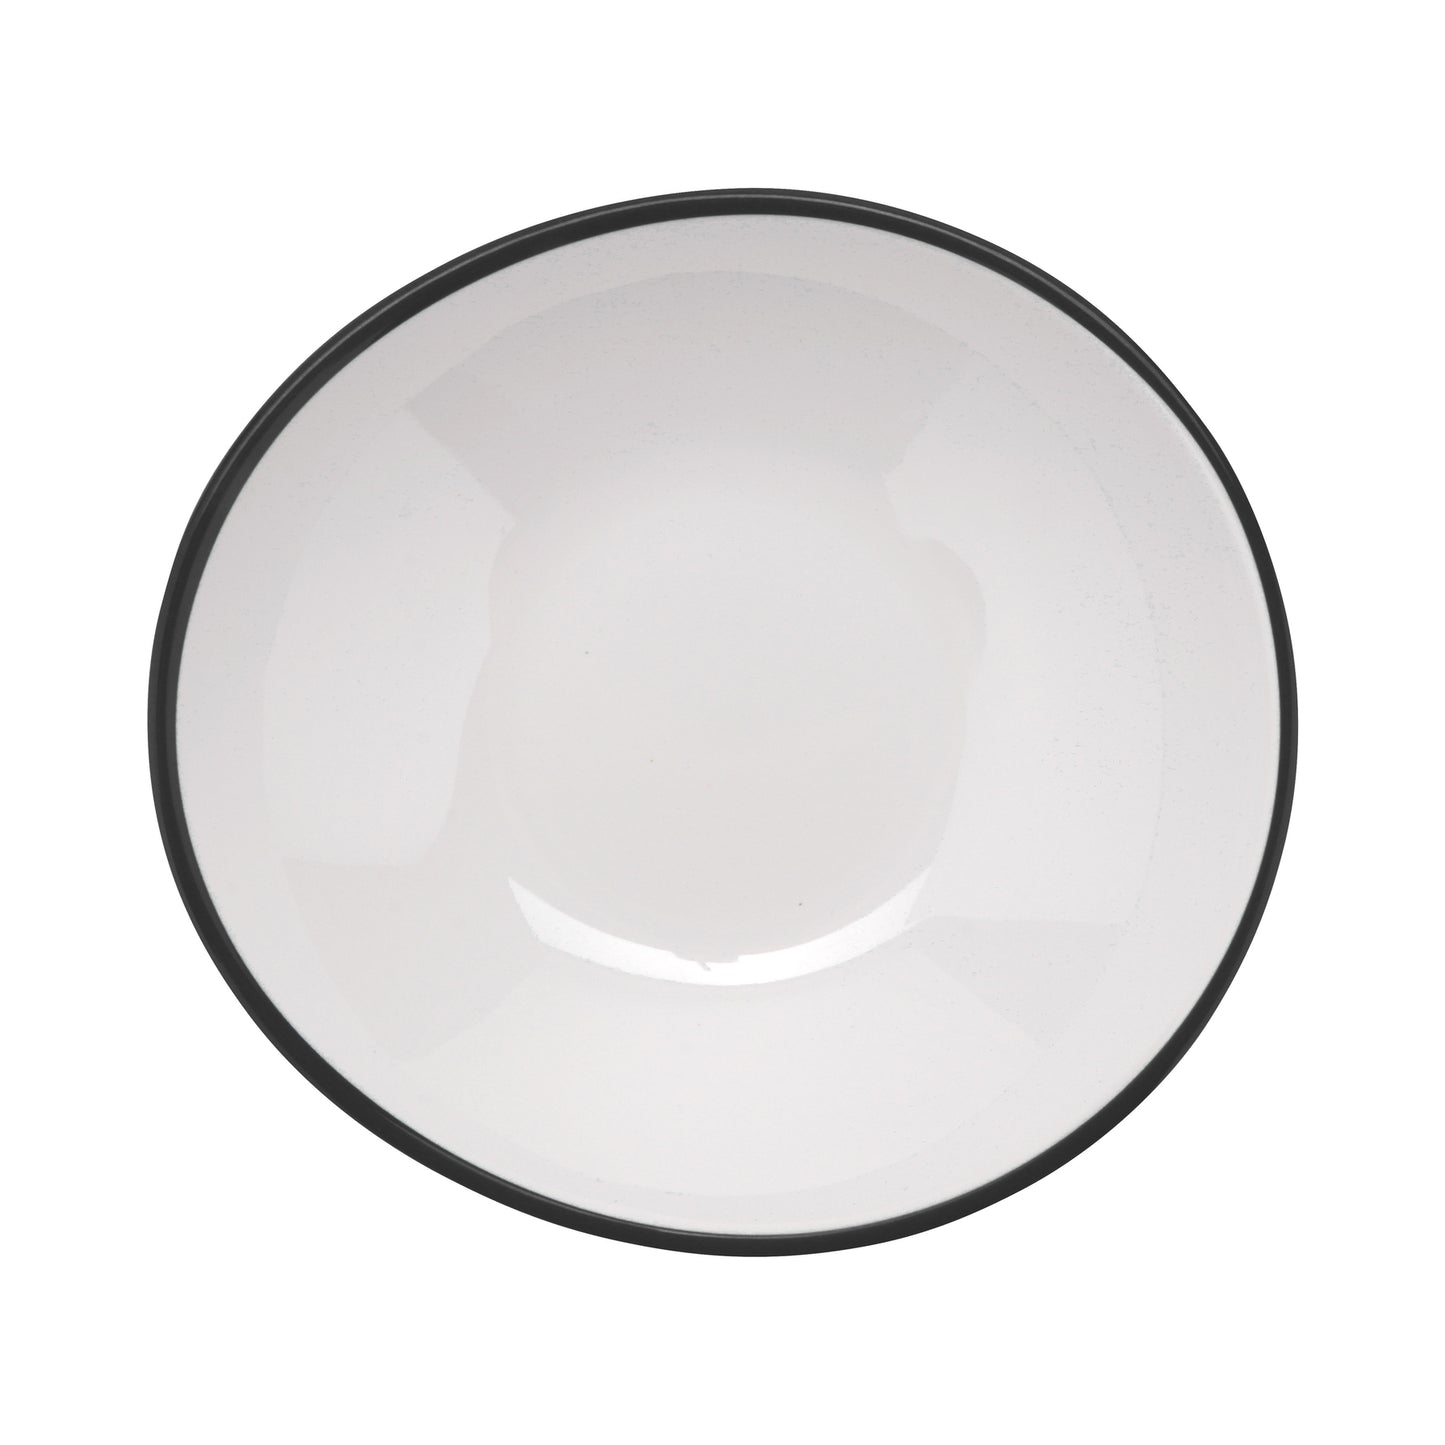 10 oz. White with Black Trim, Enamelware Melamine Shallow Bowl, 12 oz. rim-full, 7" x 6.75", 1.5" deep, G.E.T. Settlement Bistro (12 Pack)